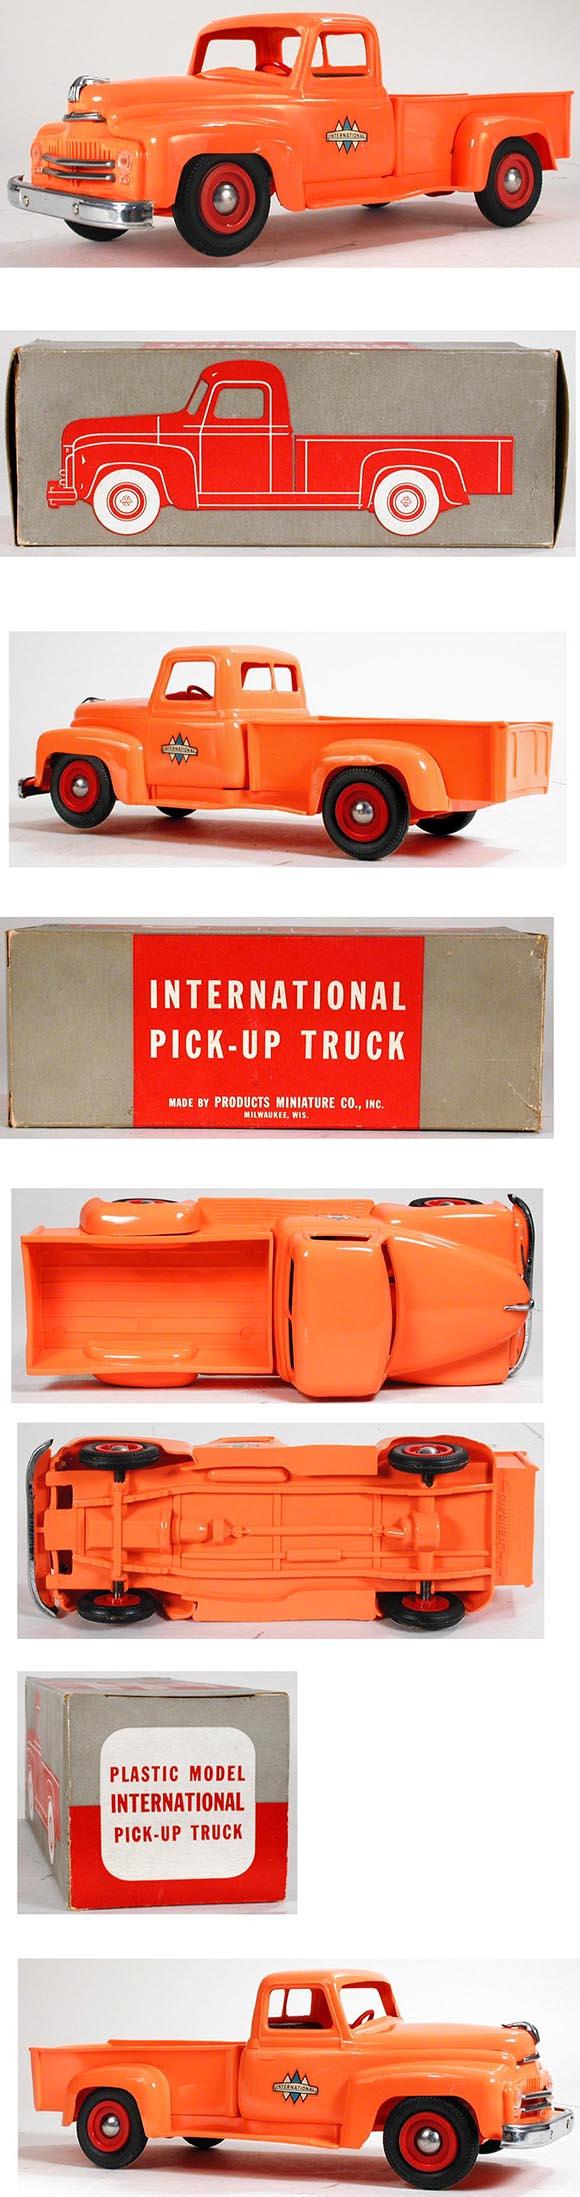 c.1947 Product Miniature Co., International Harvester Truck in Original Box